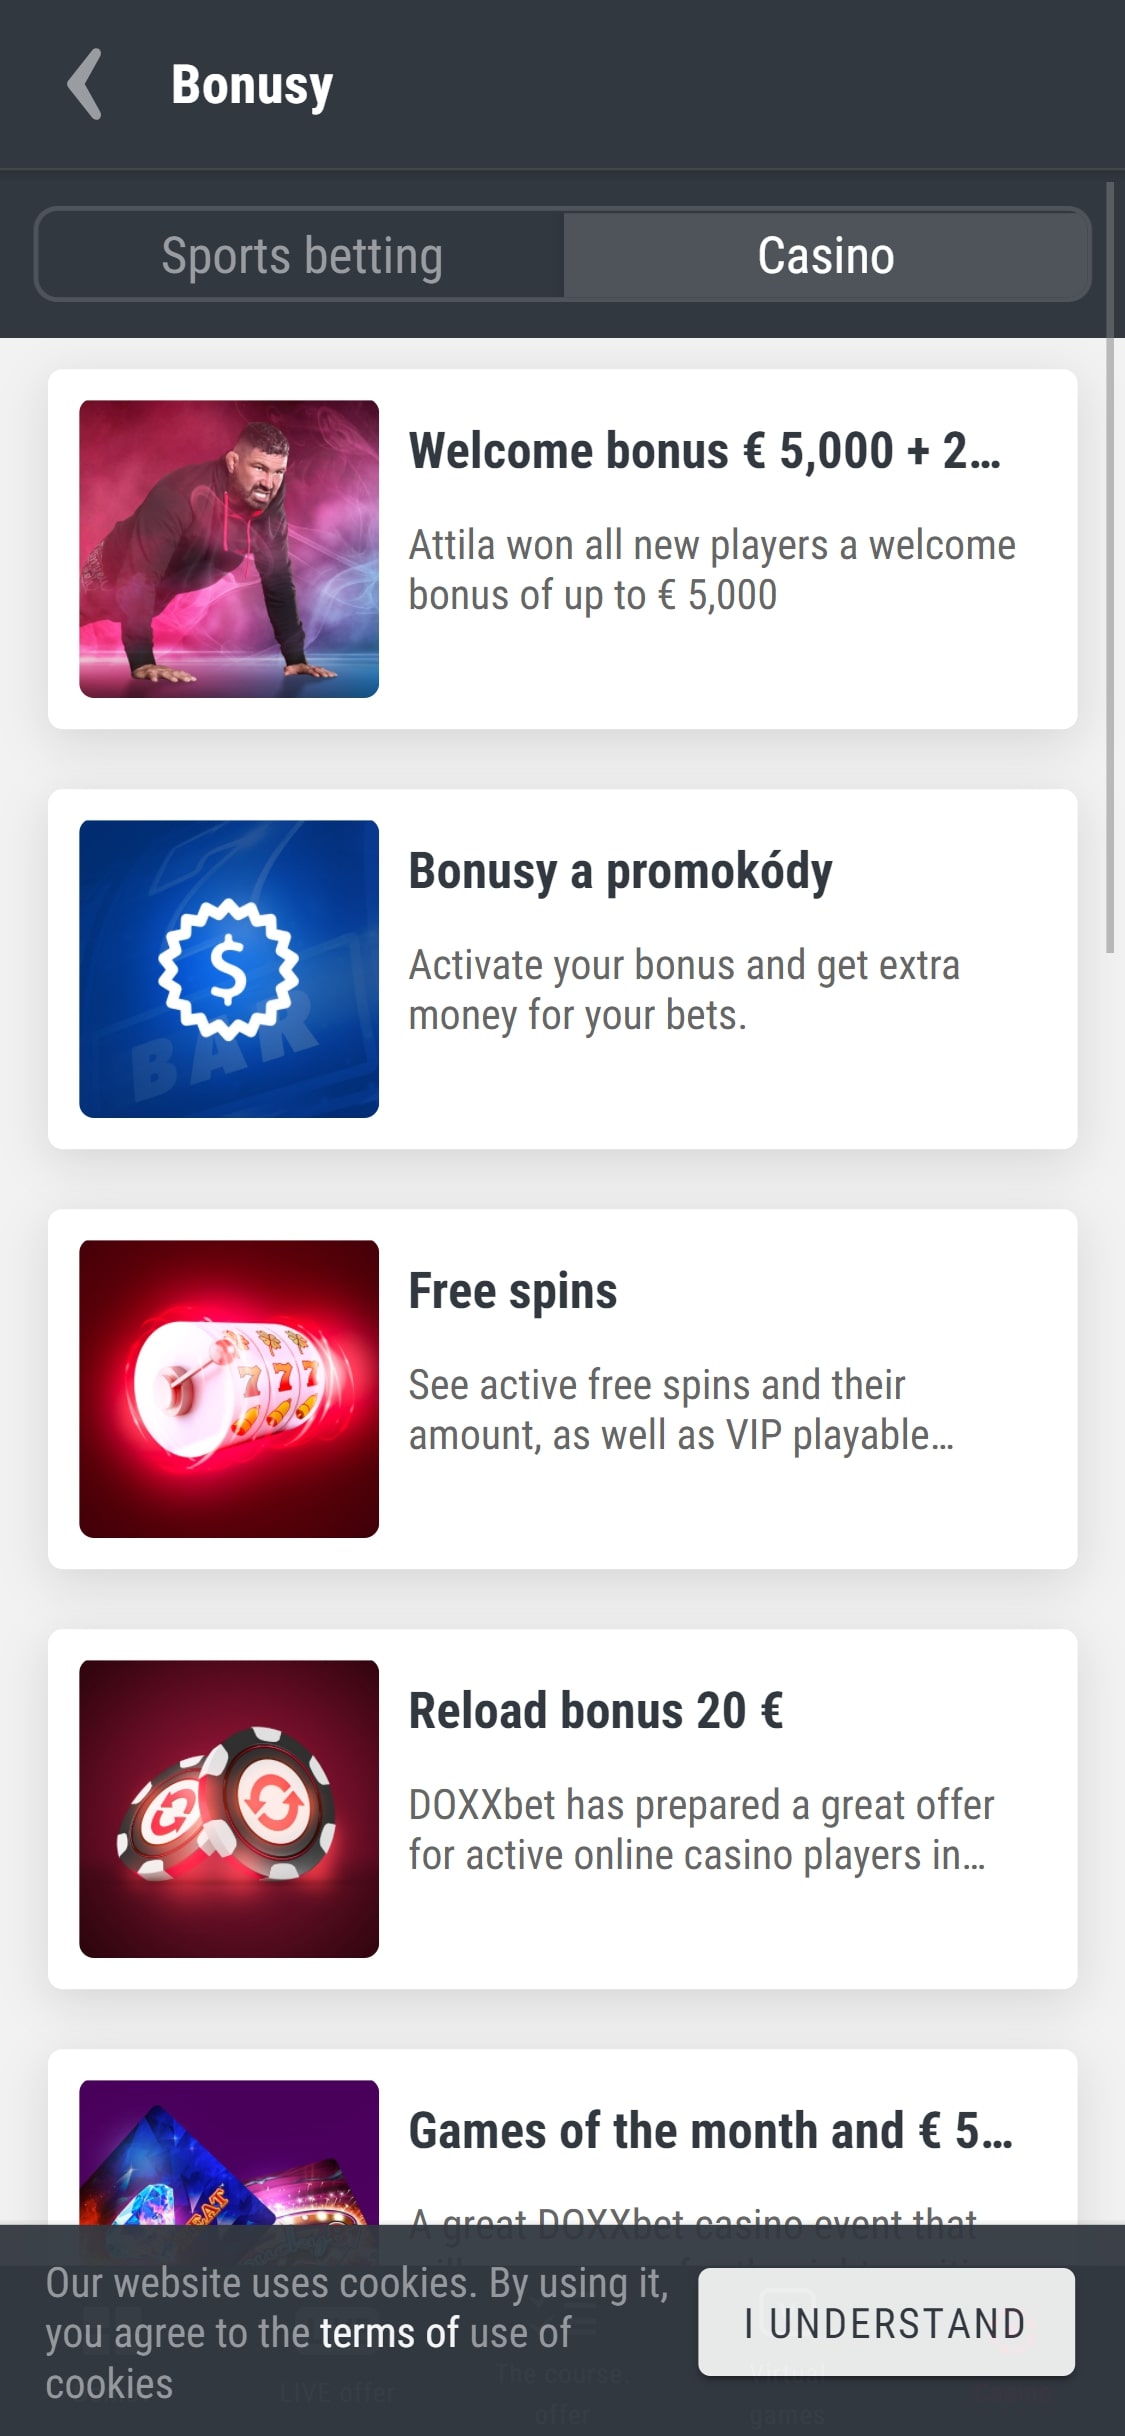 Doxxbet Casino Mobile No Deposit Bonus Review